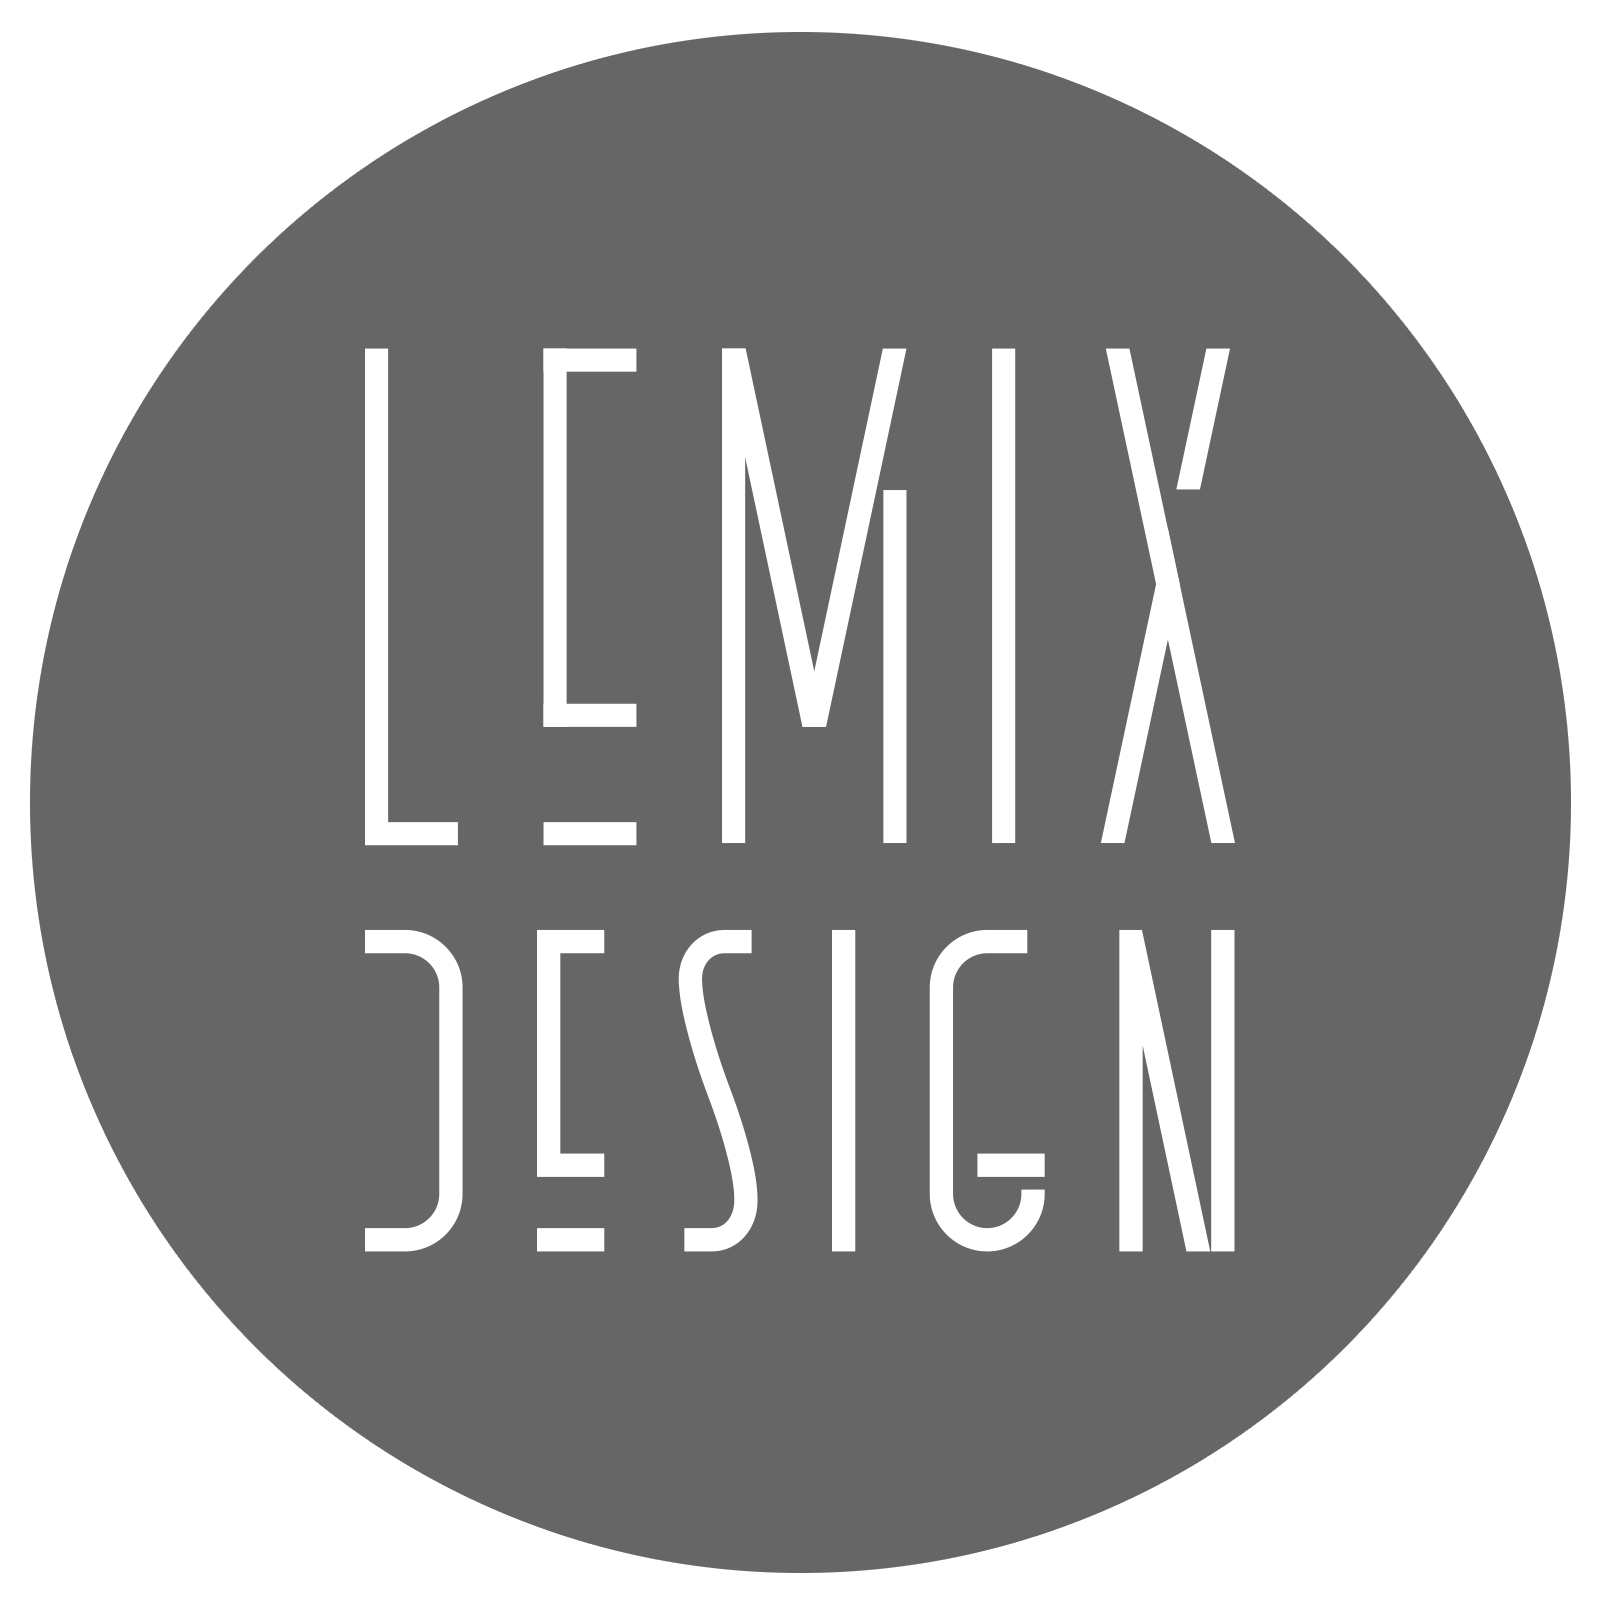  lemix design 